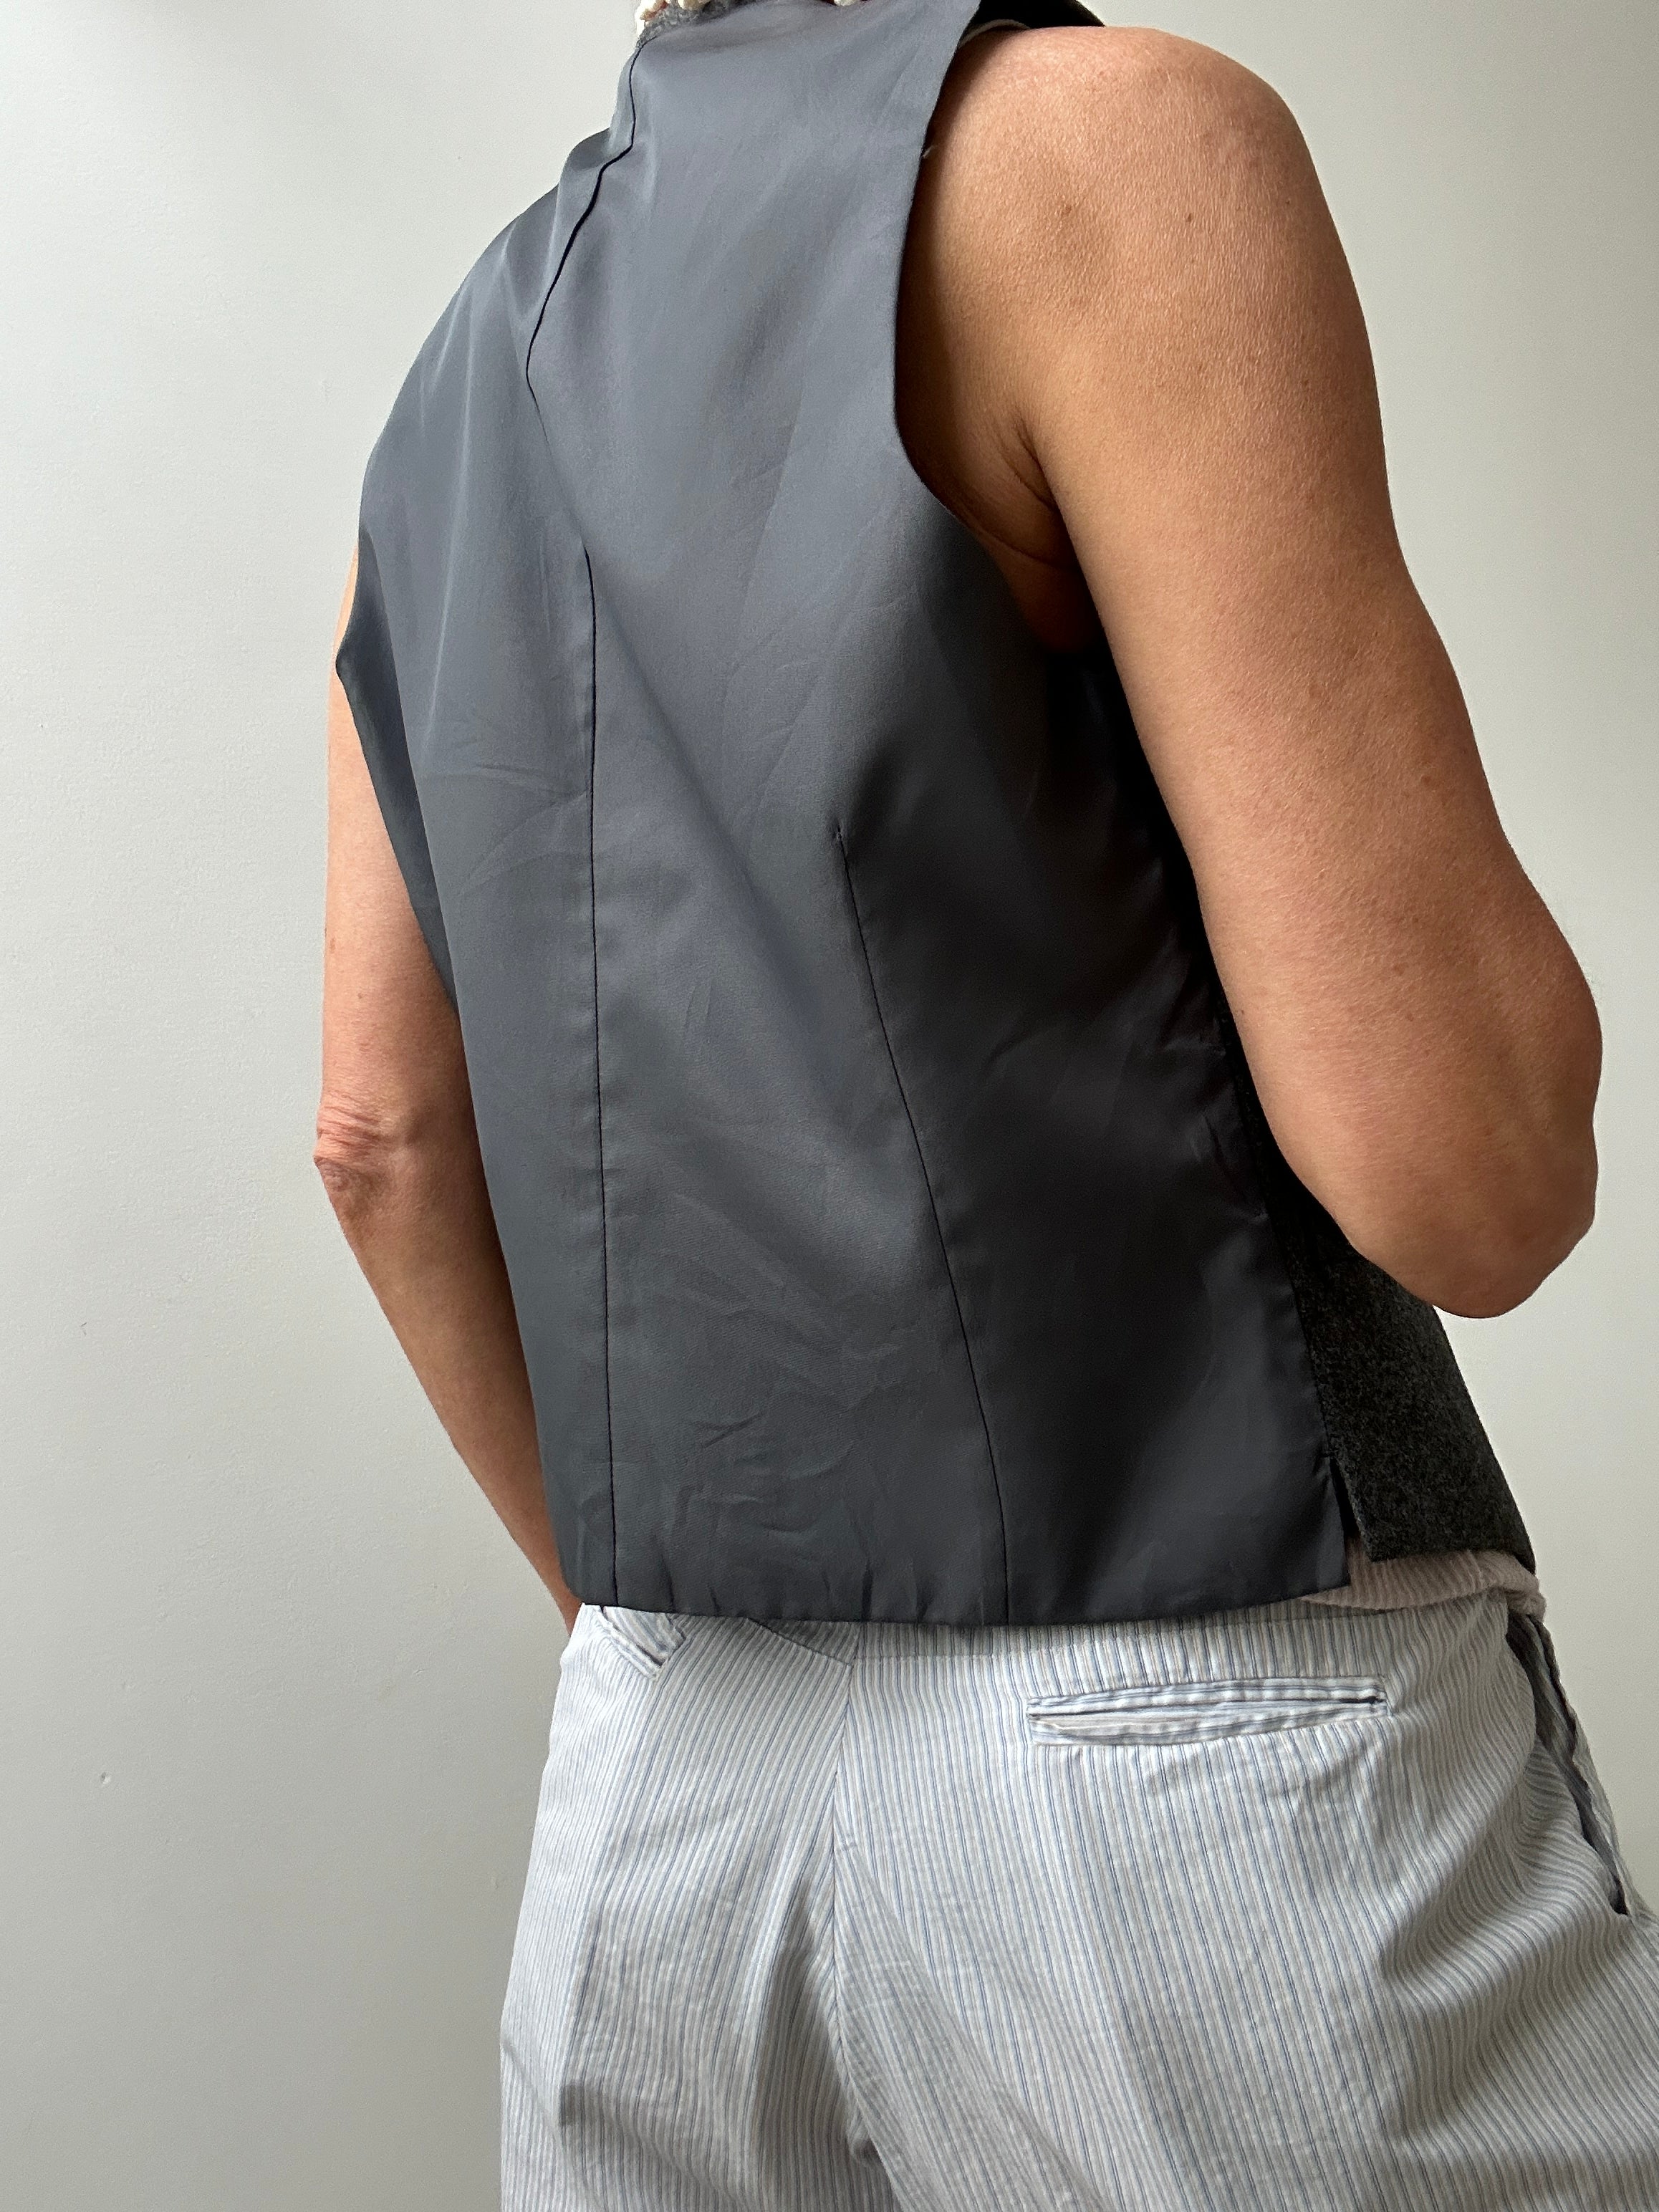 Future Nomads Vests Small Vintage Suit Vest Classic Grey Wool